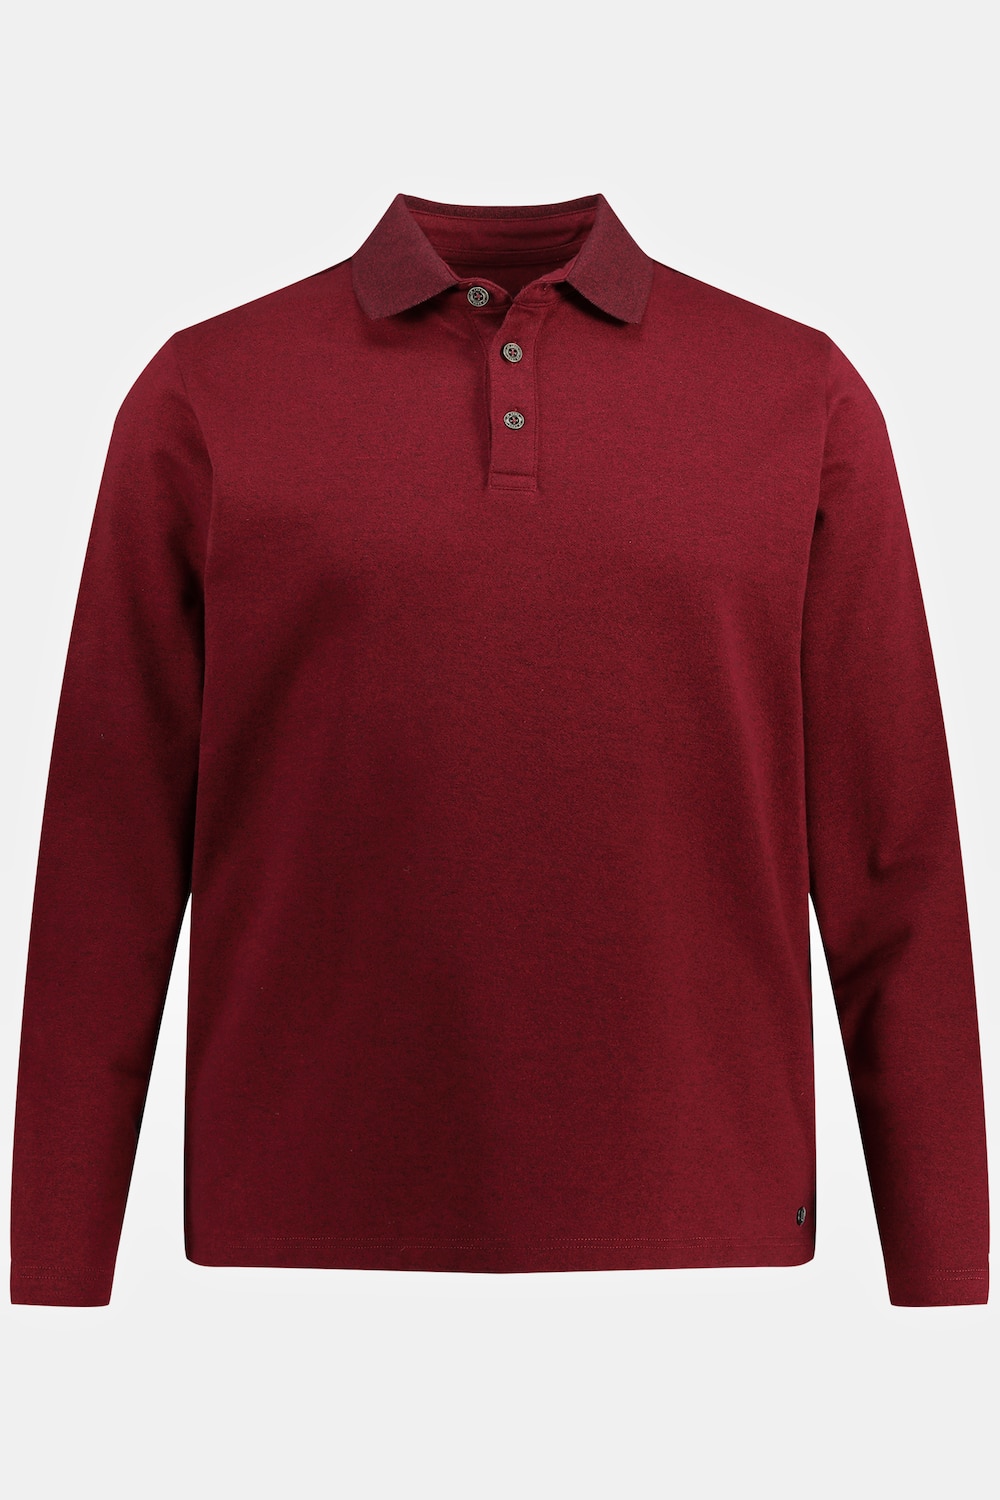 Grote Maten Poloshirt, Heren, rood, Maat: 4XL, Katoen, JP1880